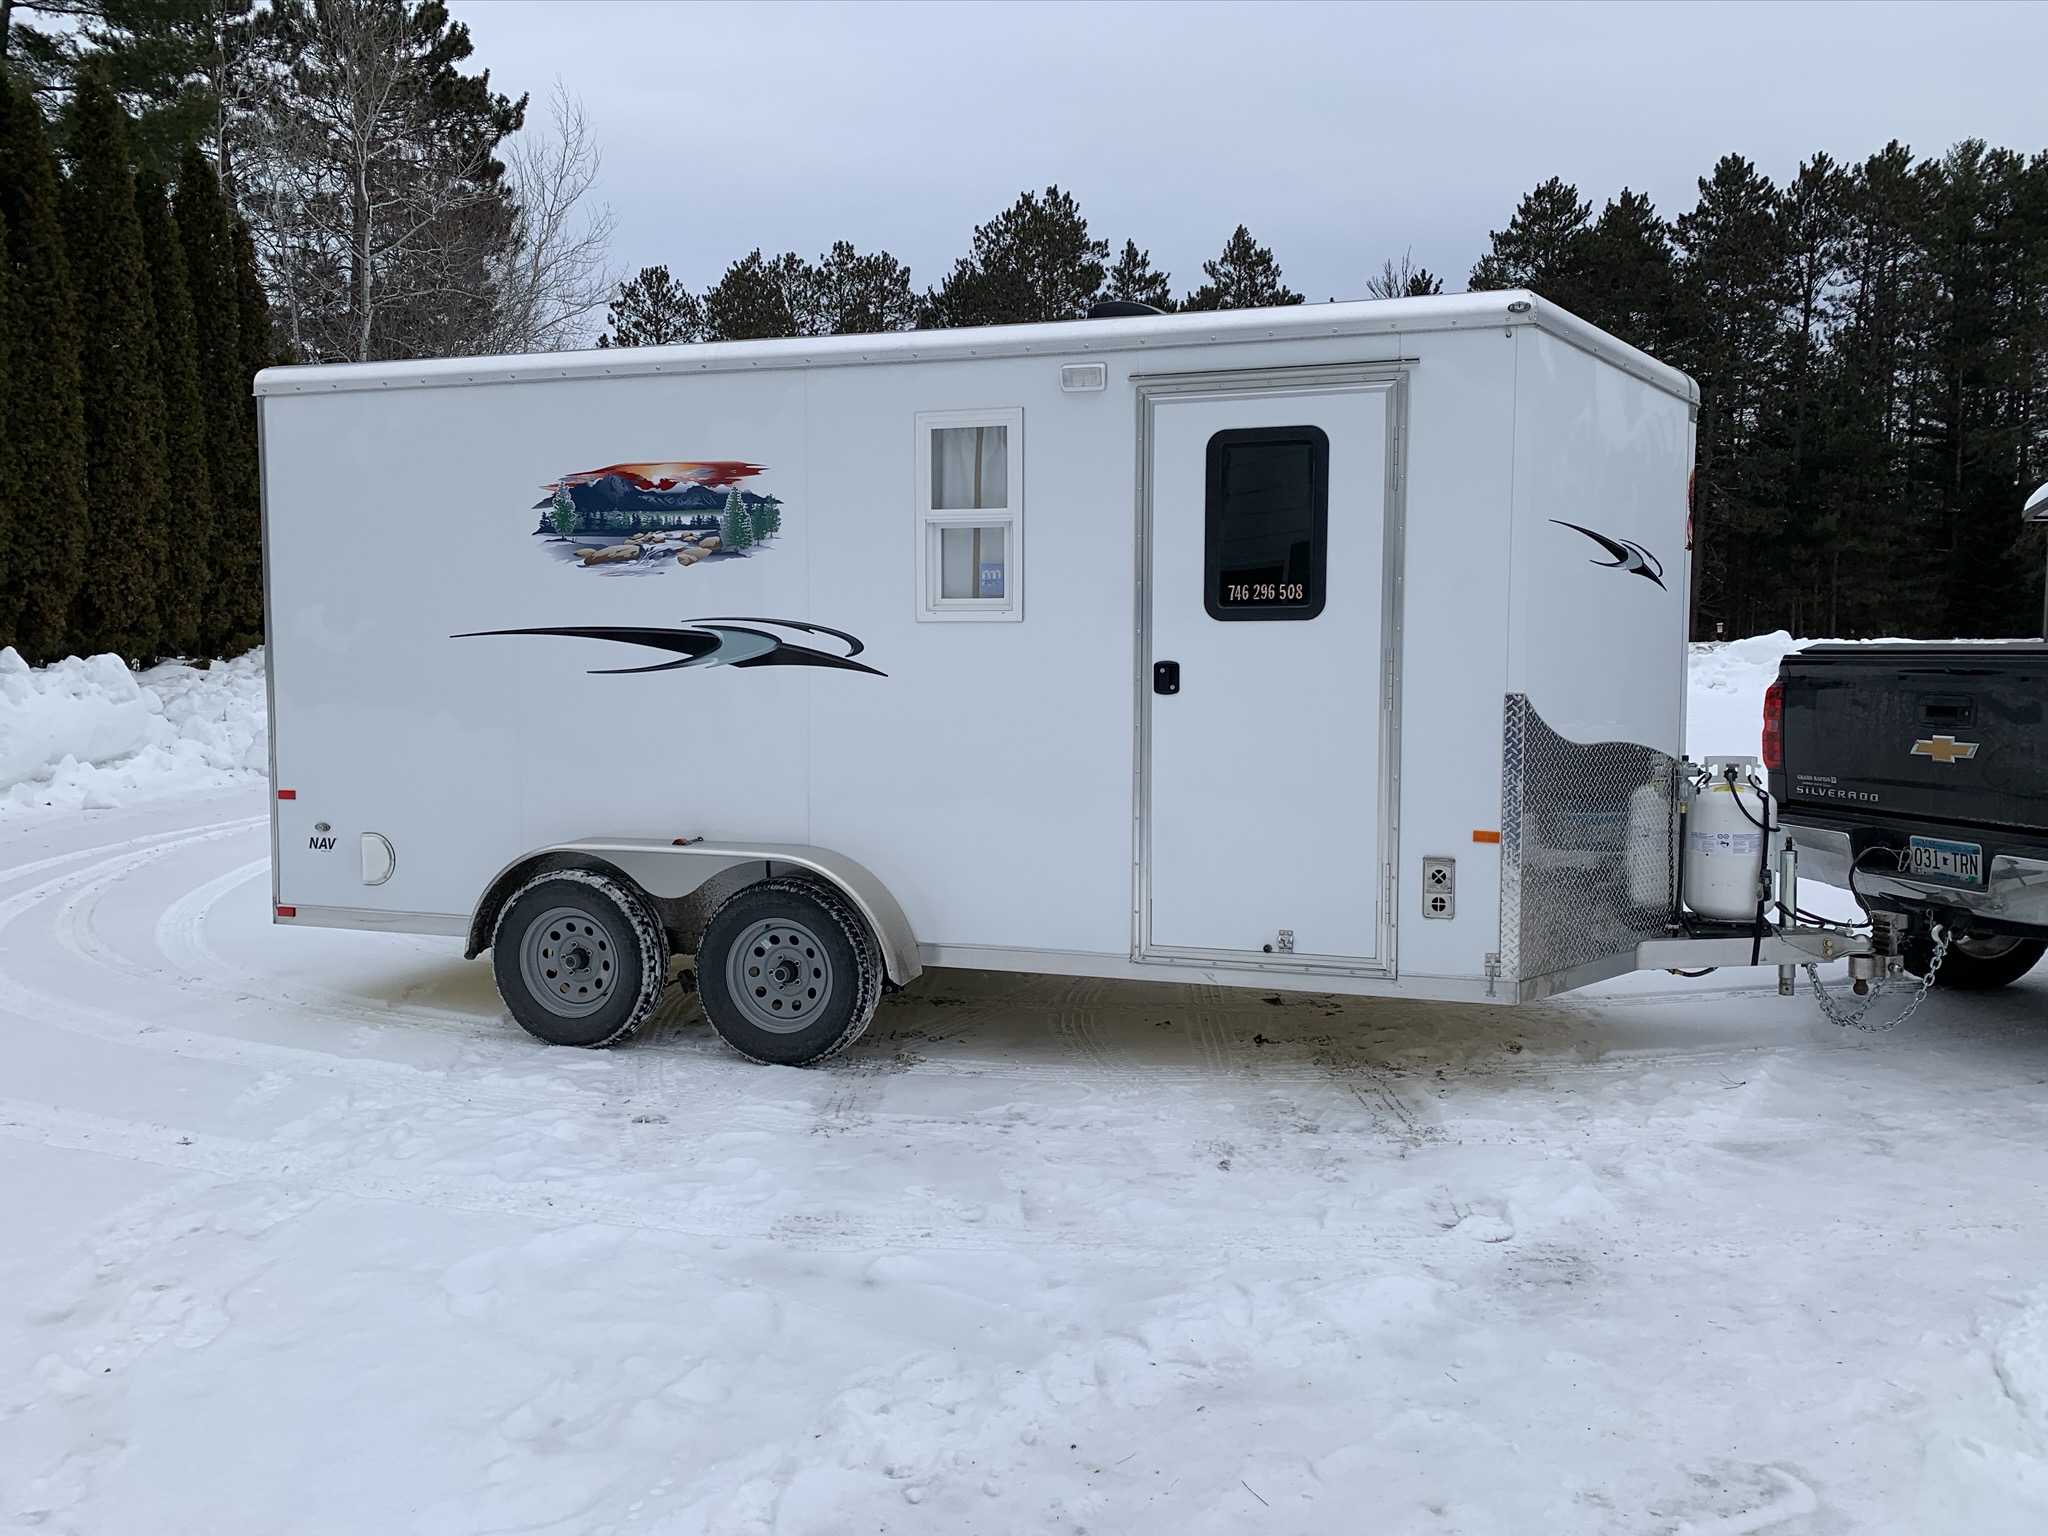 My enclosed trailer fish house - Ice Fishing Forum - Ice Fishing Forum